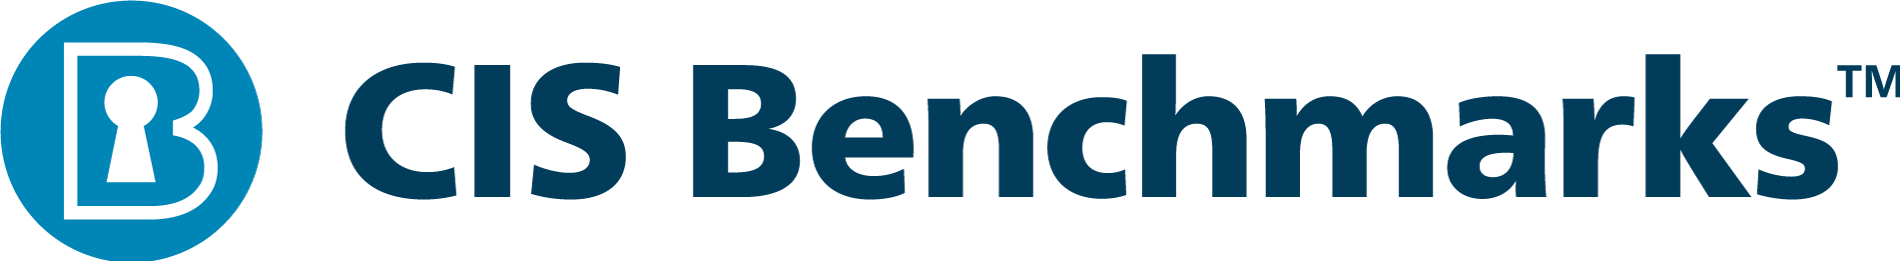 CIS Benchmarks Logo